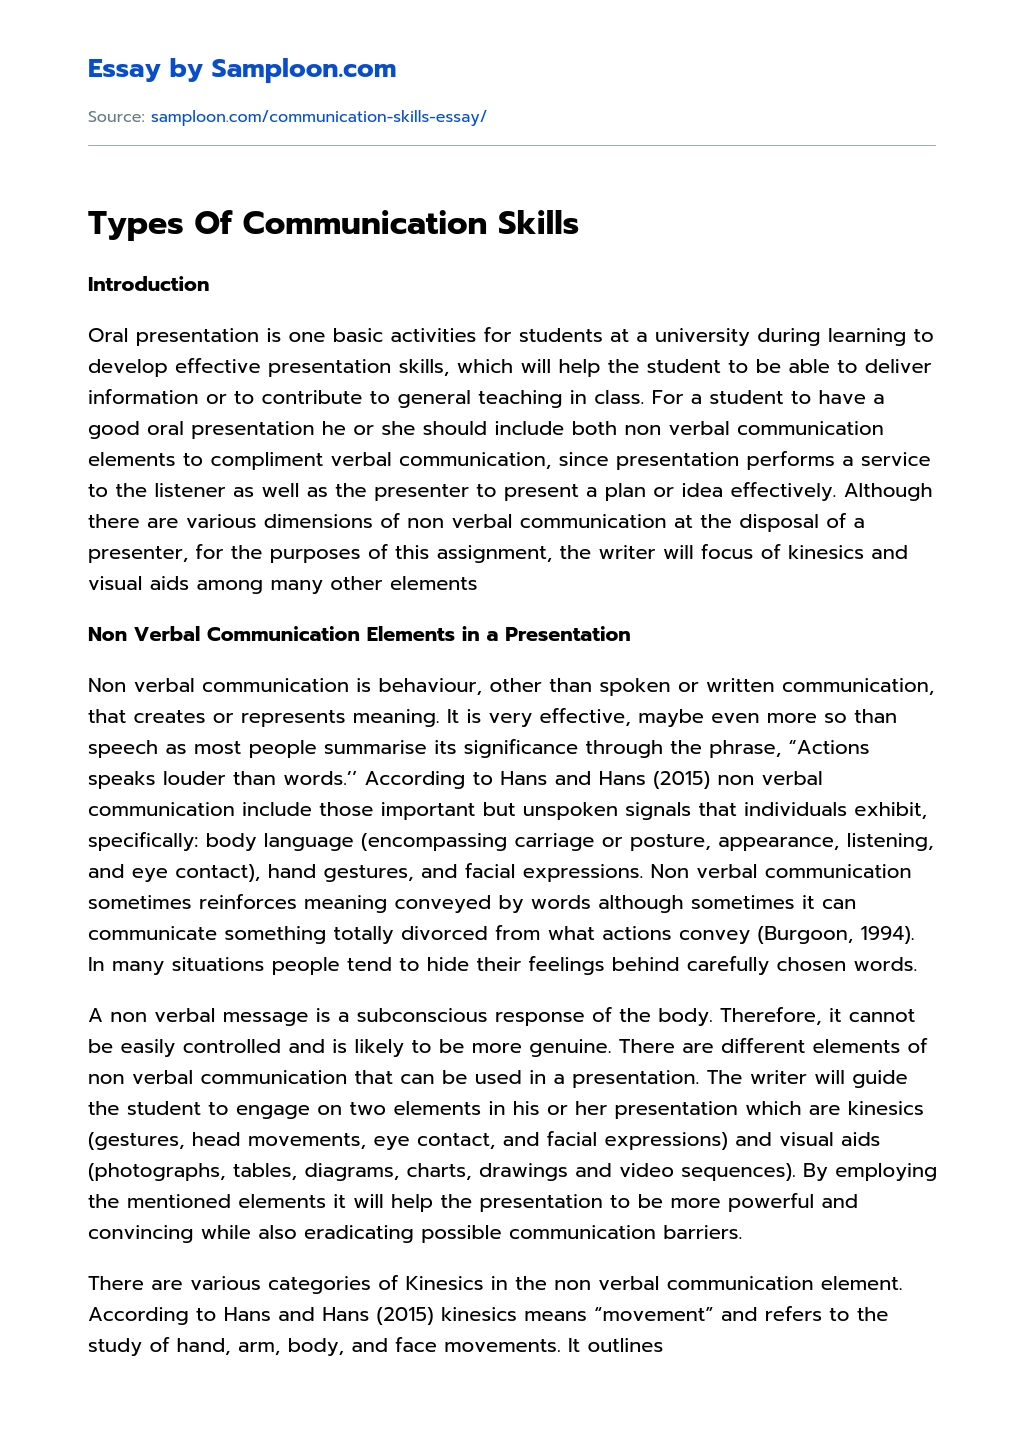 Types Of Communication Skills essay